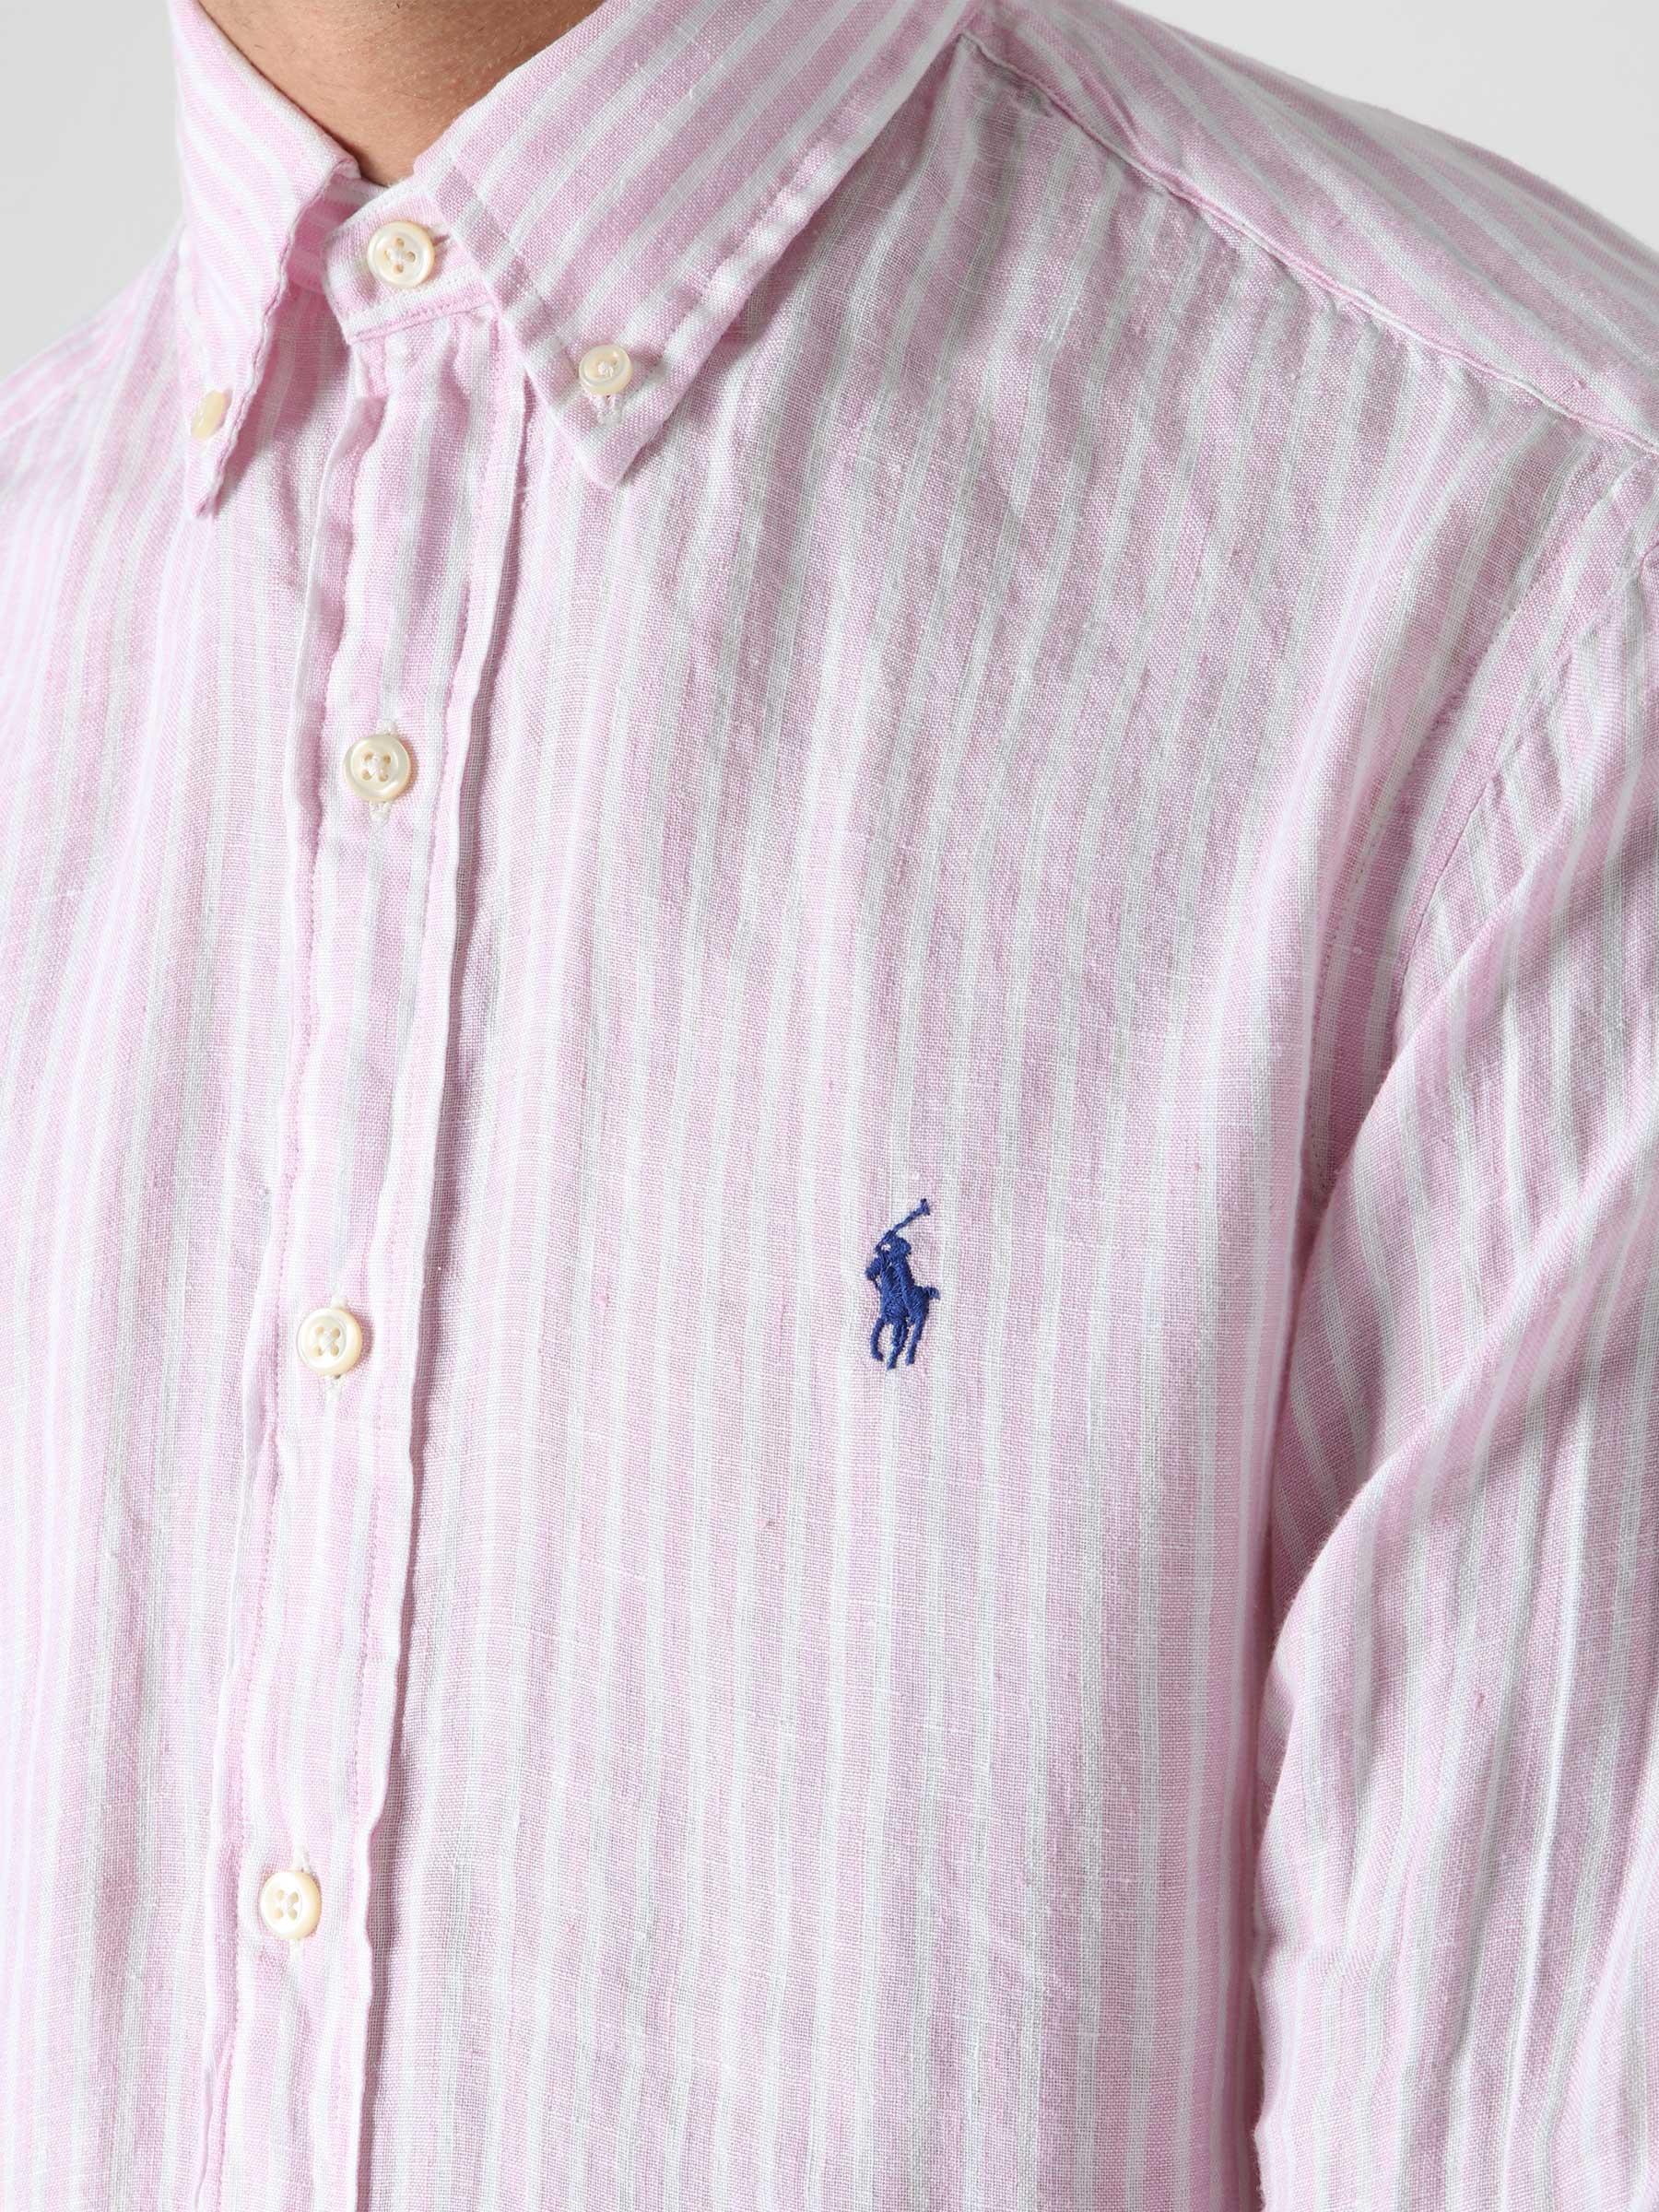 RL Linen Sport Shirt Pink White 710873446002